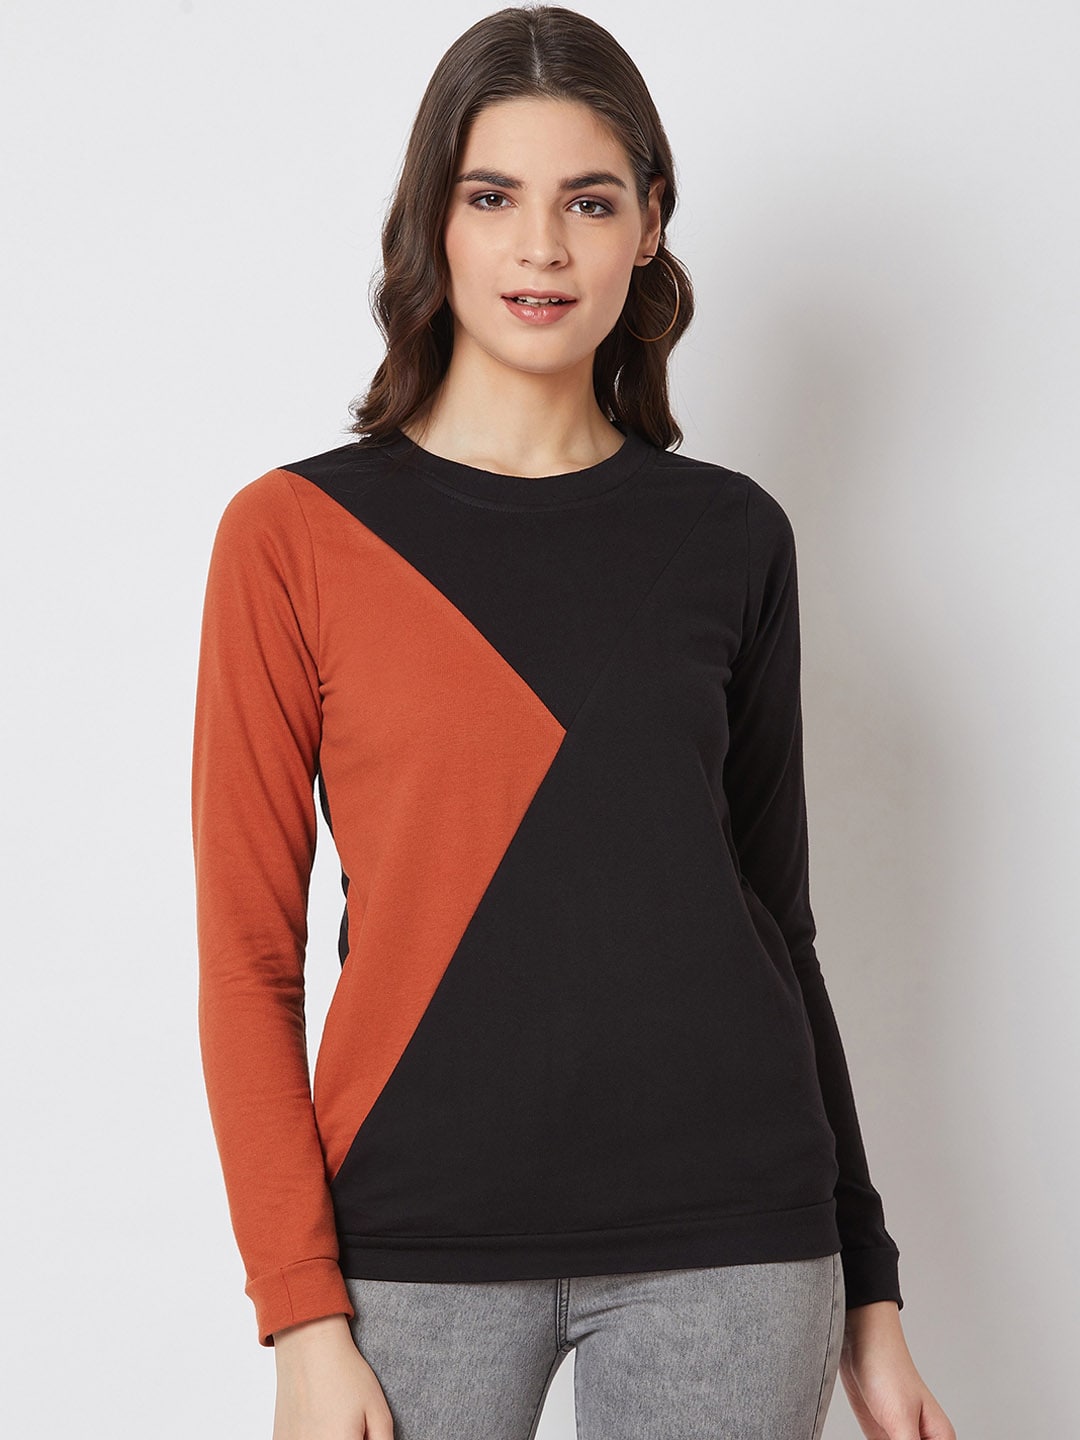 Nun Women Black & Orange Colourblocked Sweatshirt Price in India